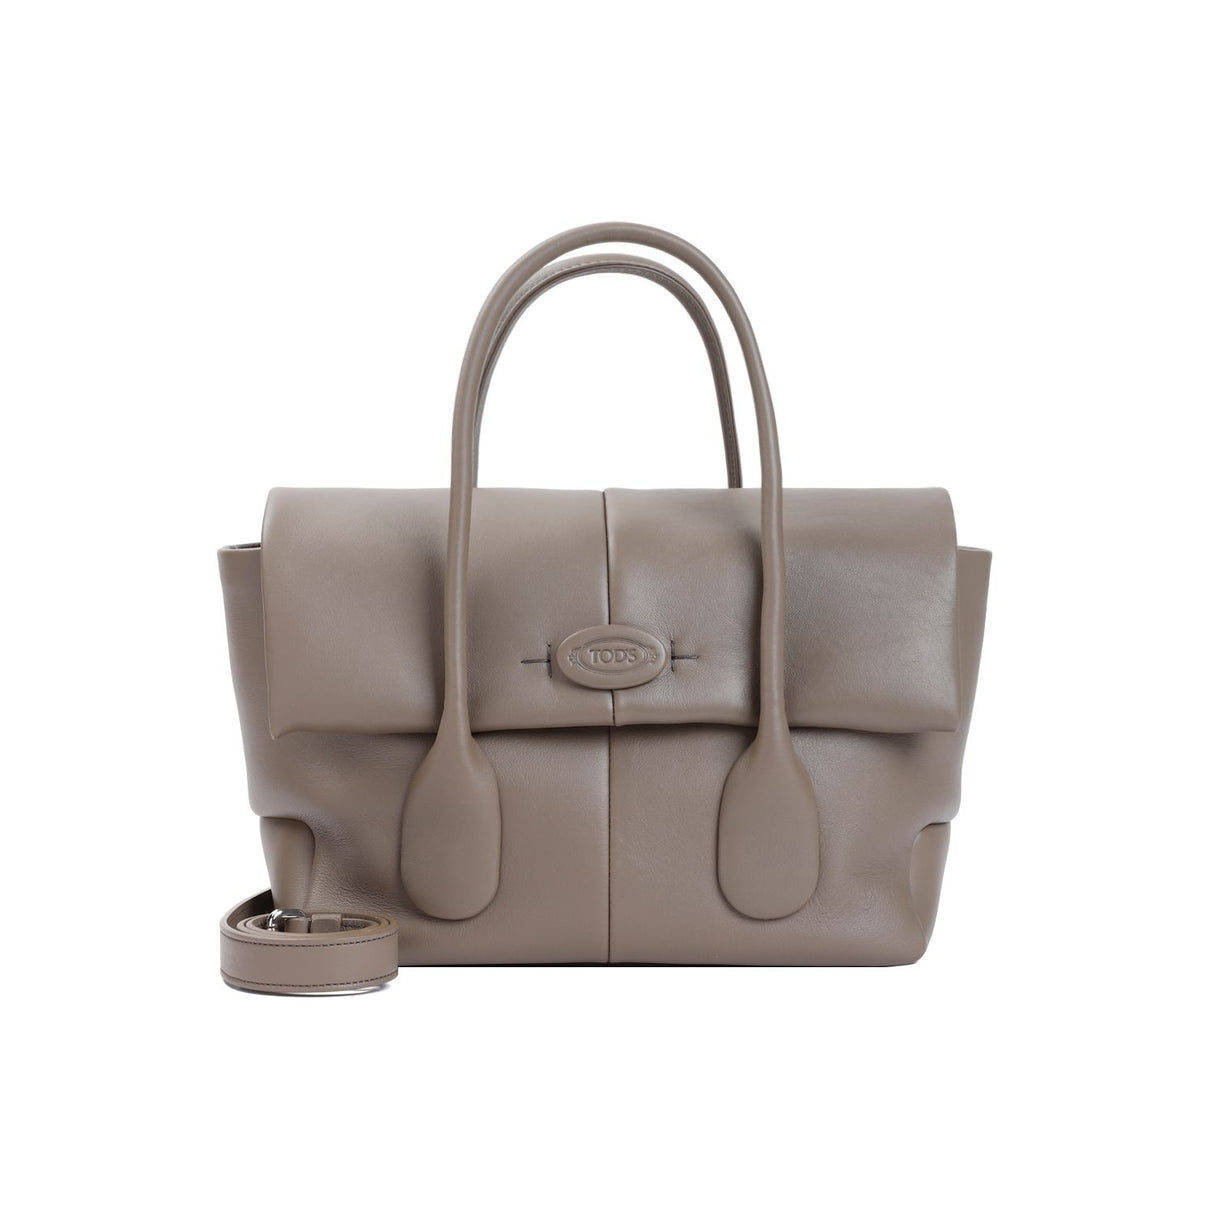 TOD'S Luxury Gray Leather Handbag for the Fashion-Forward Woman